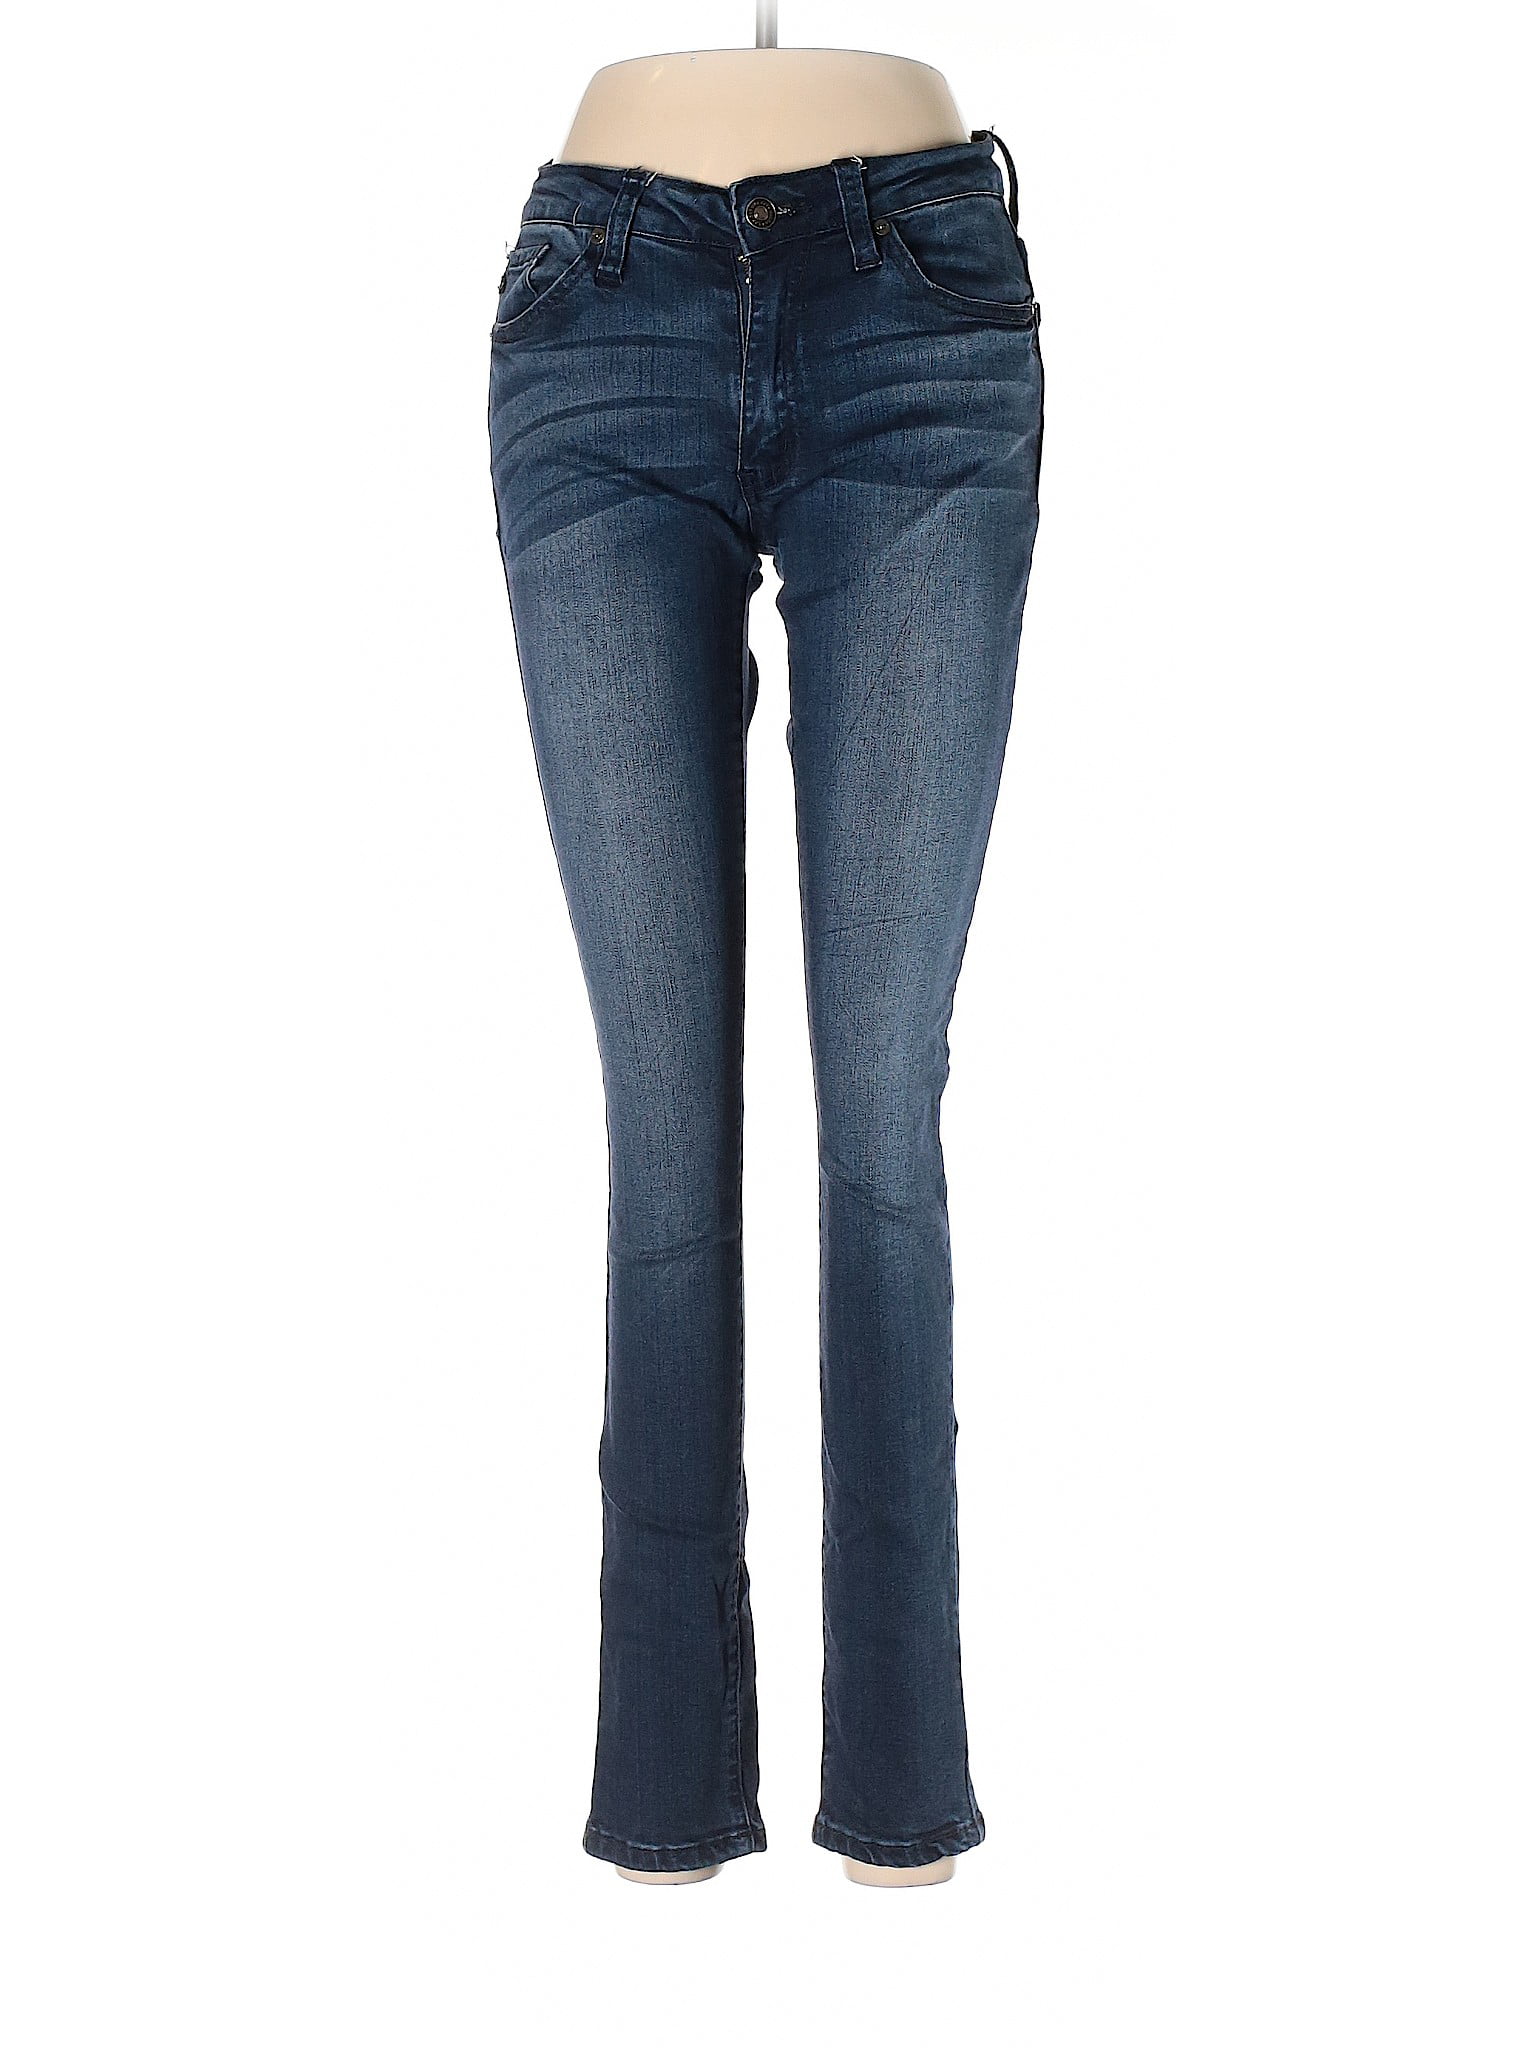 KANCAN JEANS - Pre-Owned KANCAN JEANS Women's Size 26W Jeans - Walmart ...